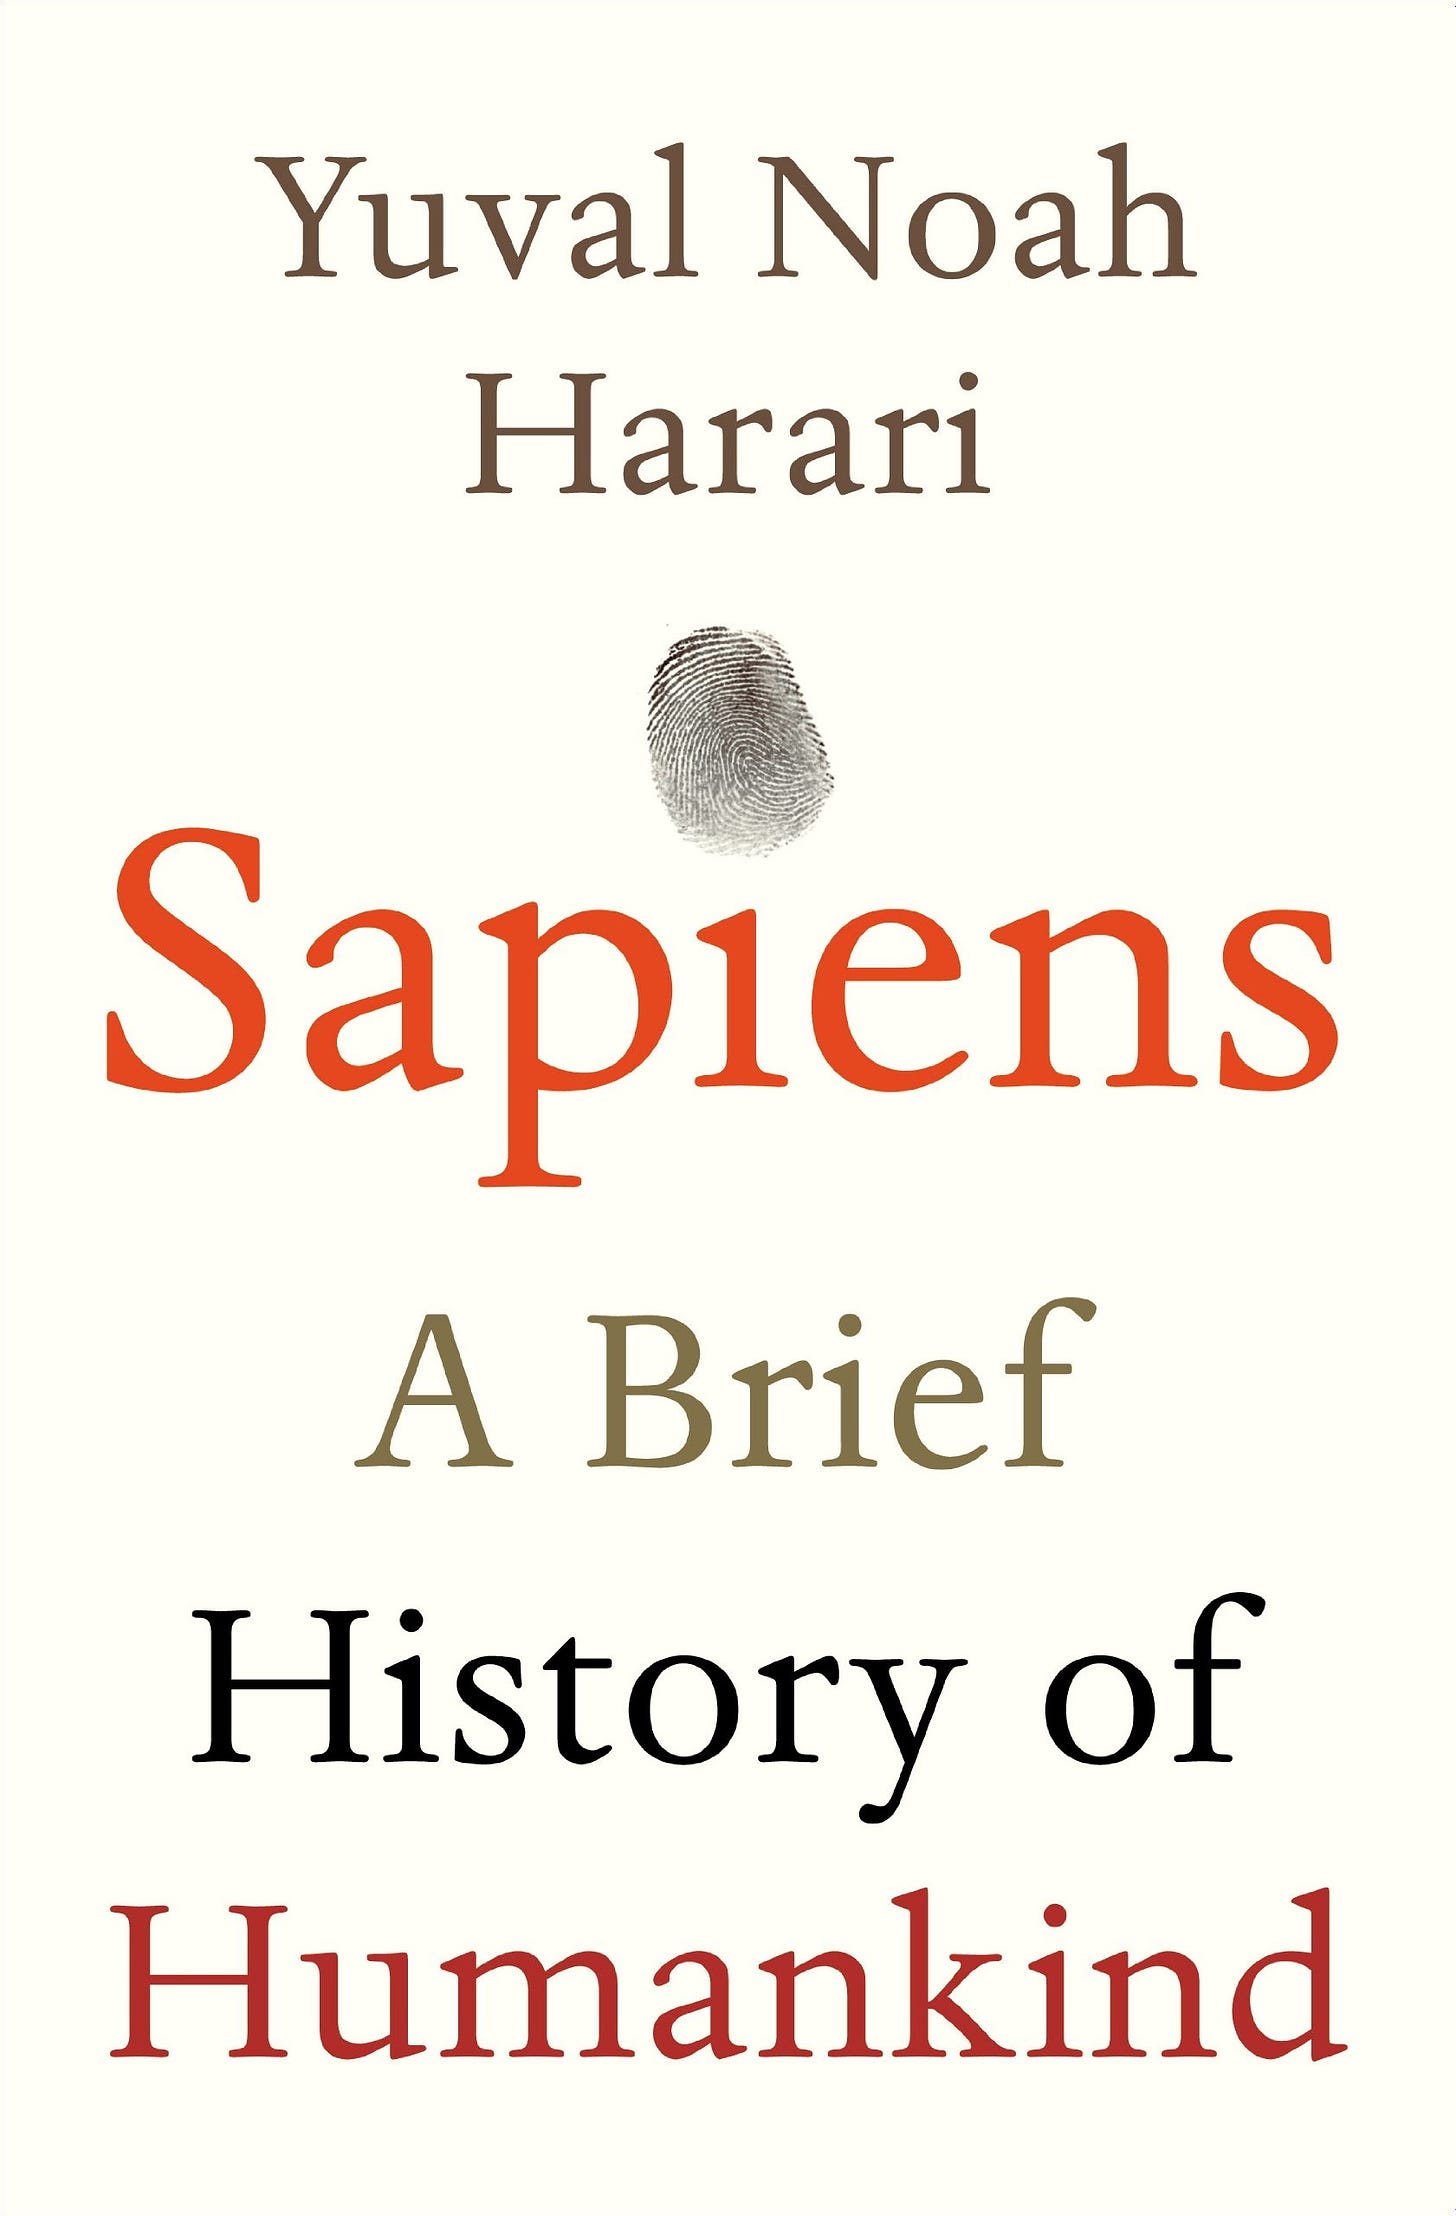 Sapiens: A Brief History of Humankind by Yuval Noah Harari | Goodreads